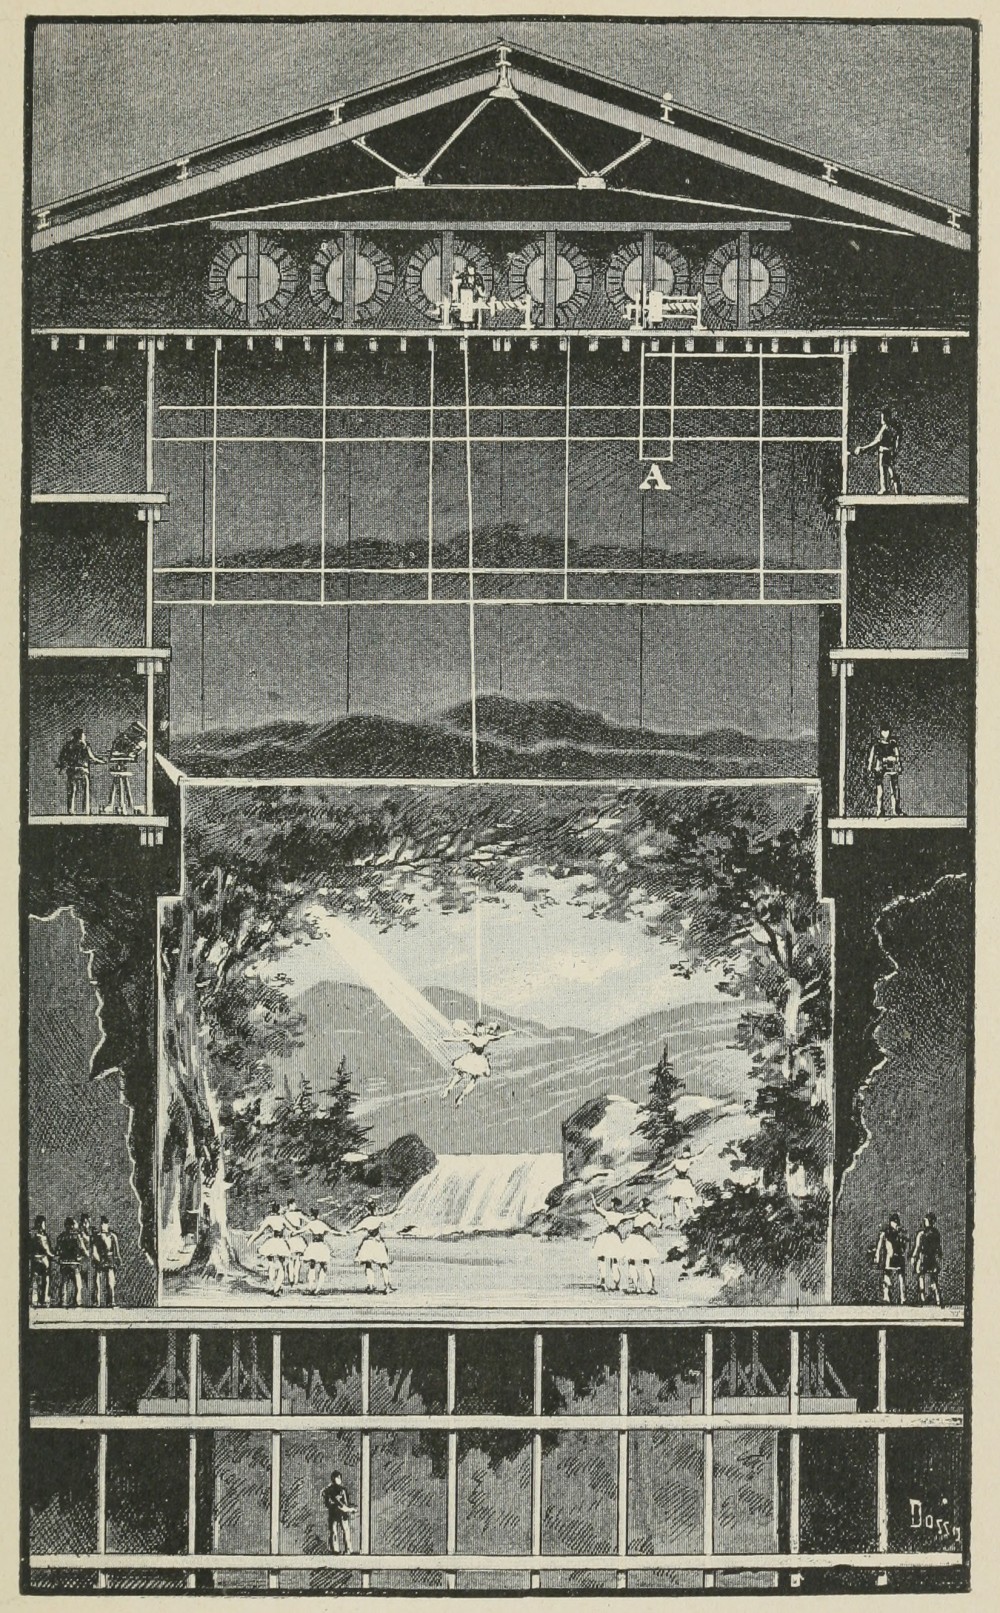 Illustration from Trucs et Decors